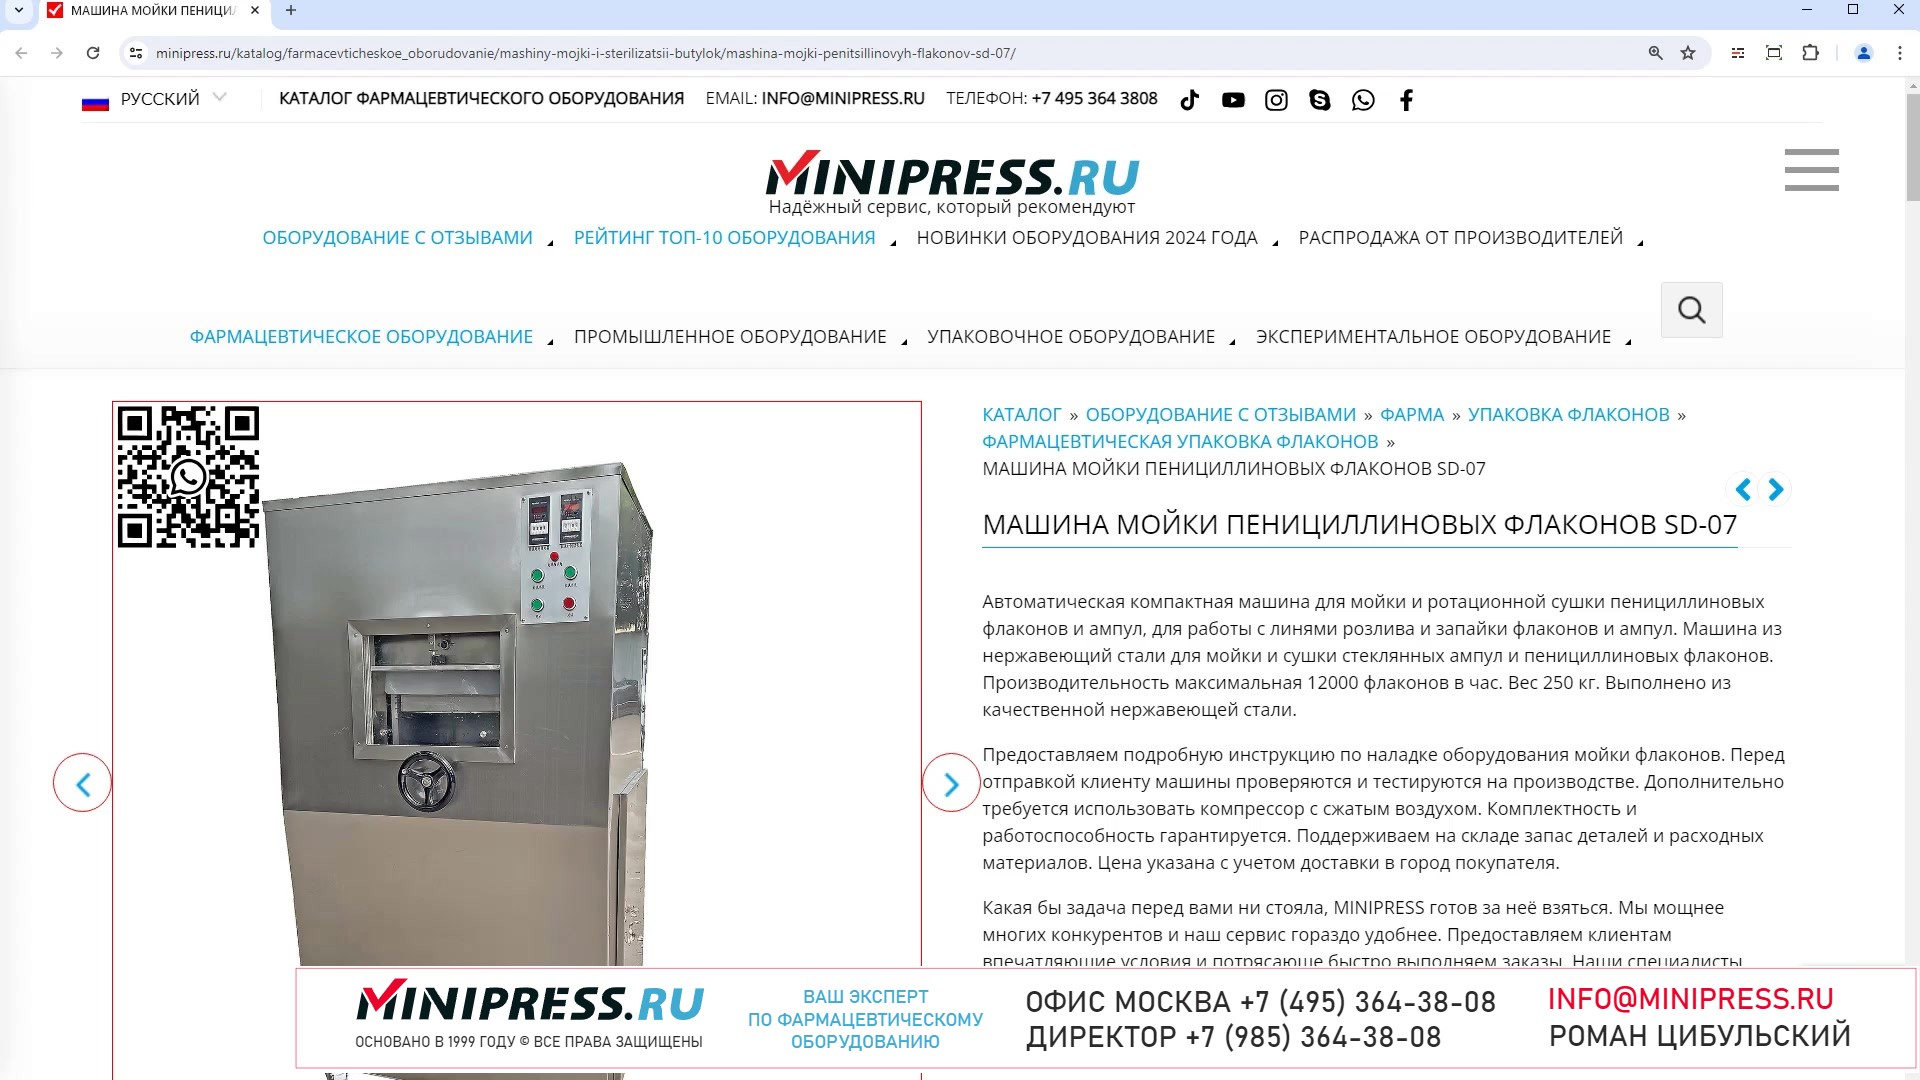 Minipress.ru Машина мойки пенициллиновых флаконов SD-07